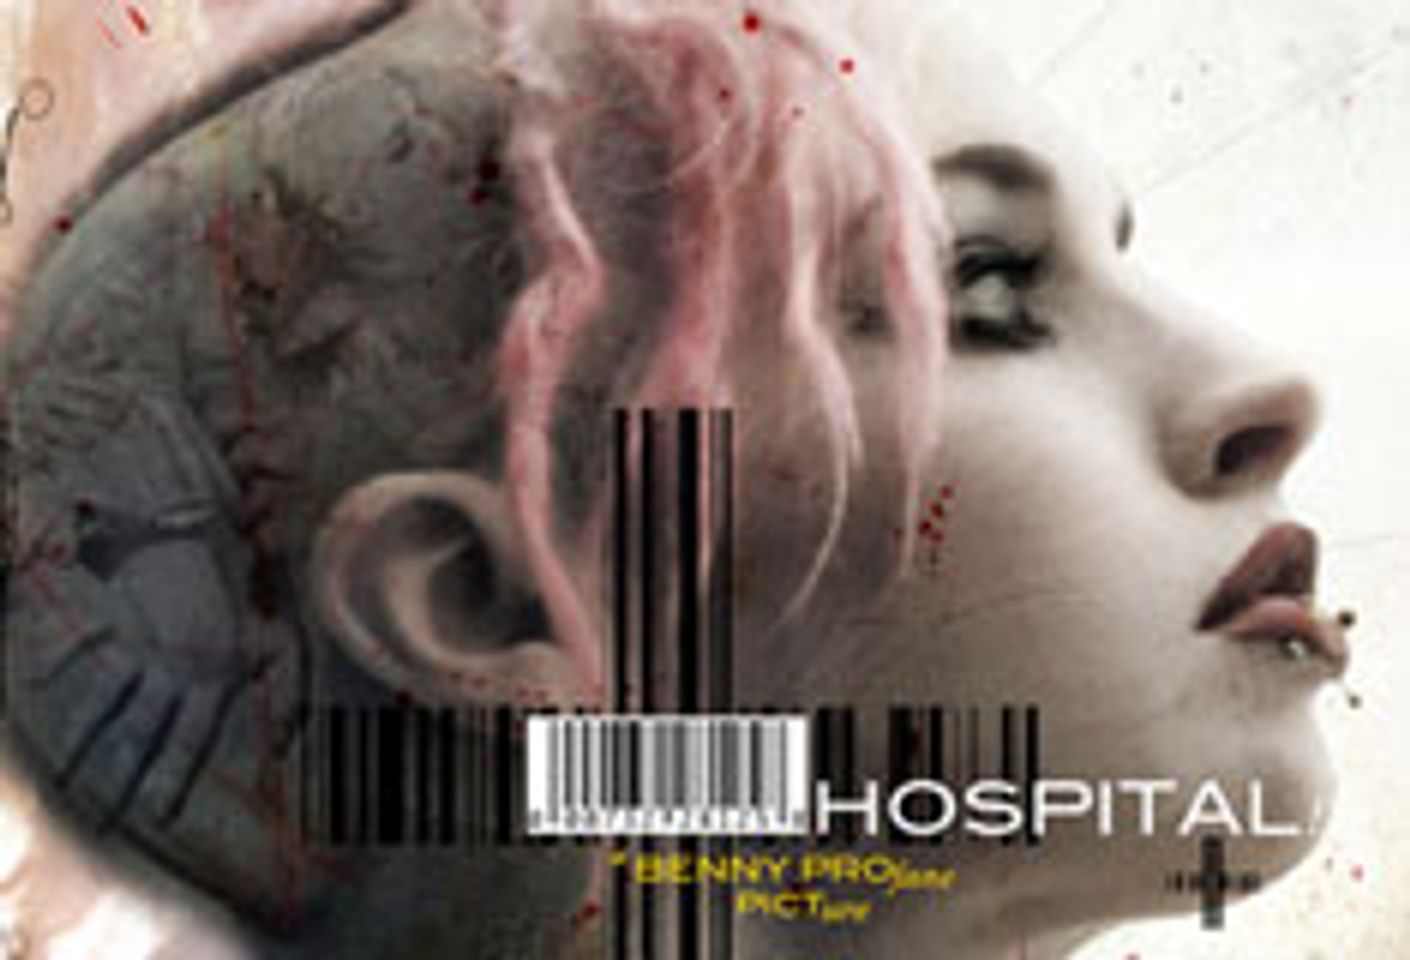 Vivid-Alt Throws 'Hospital' DVD Release Party